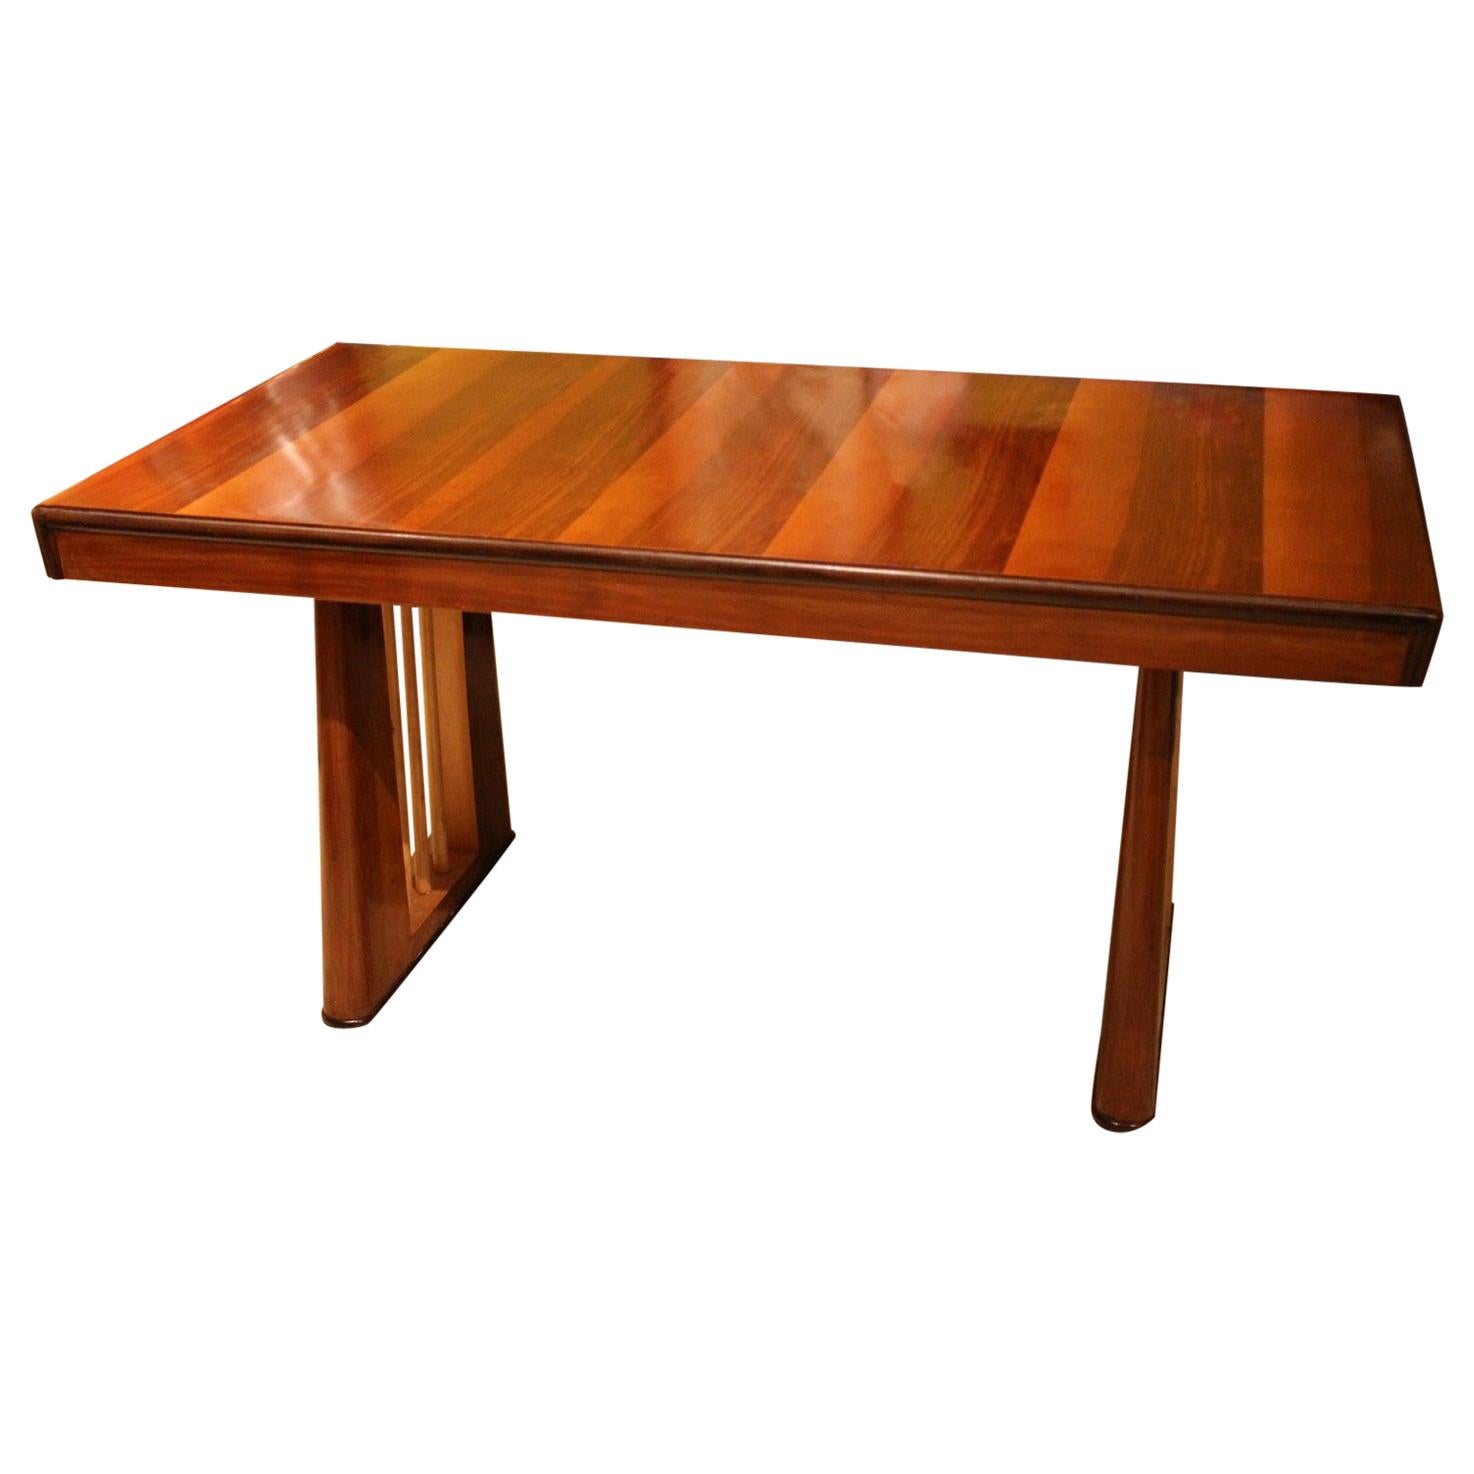 Italian Art Deco Rectangular Walnut and Maple Wood Writing Desk or Console Table